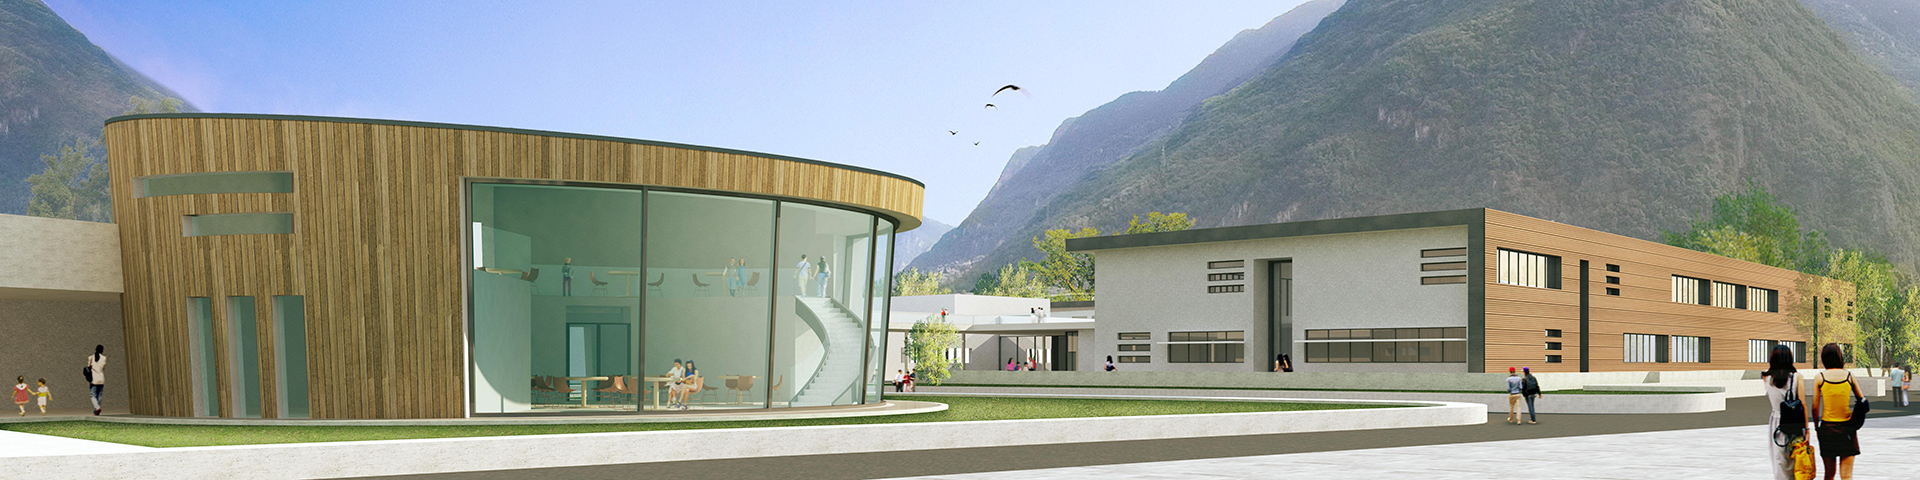 Campus scolastico Bellinzona in Svizzera